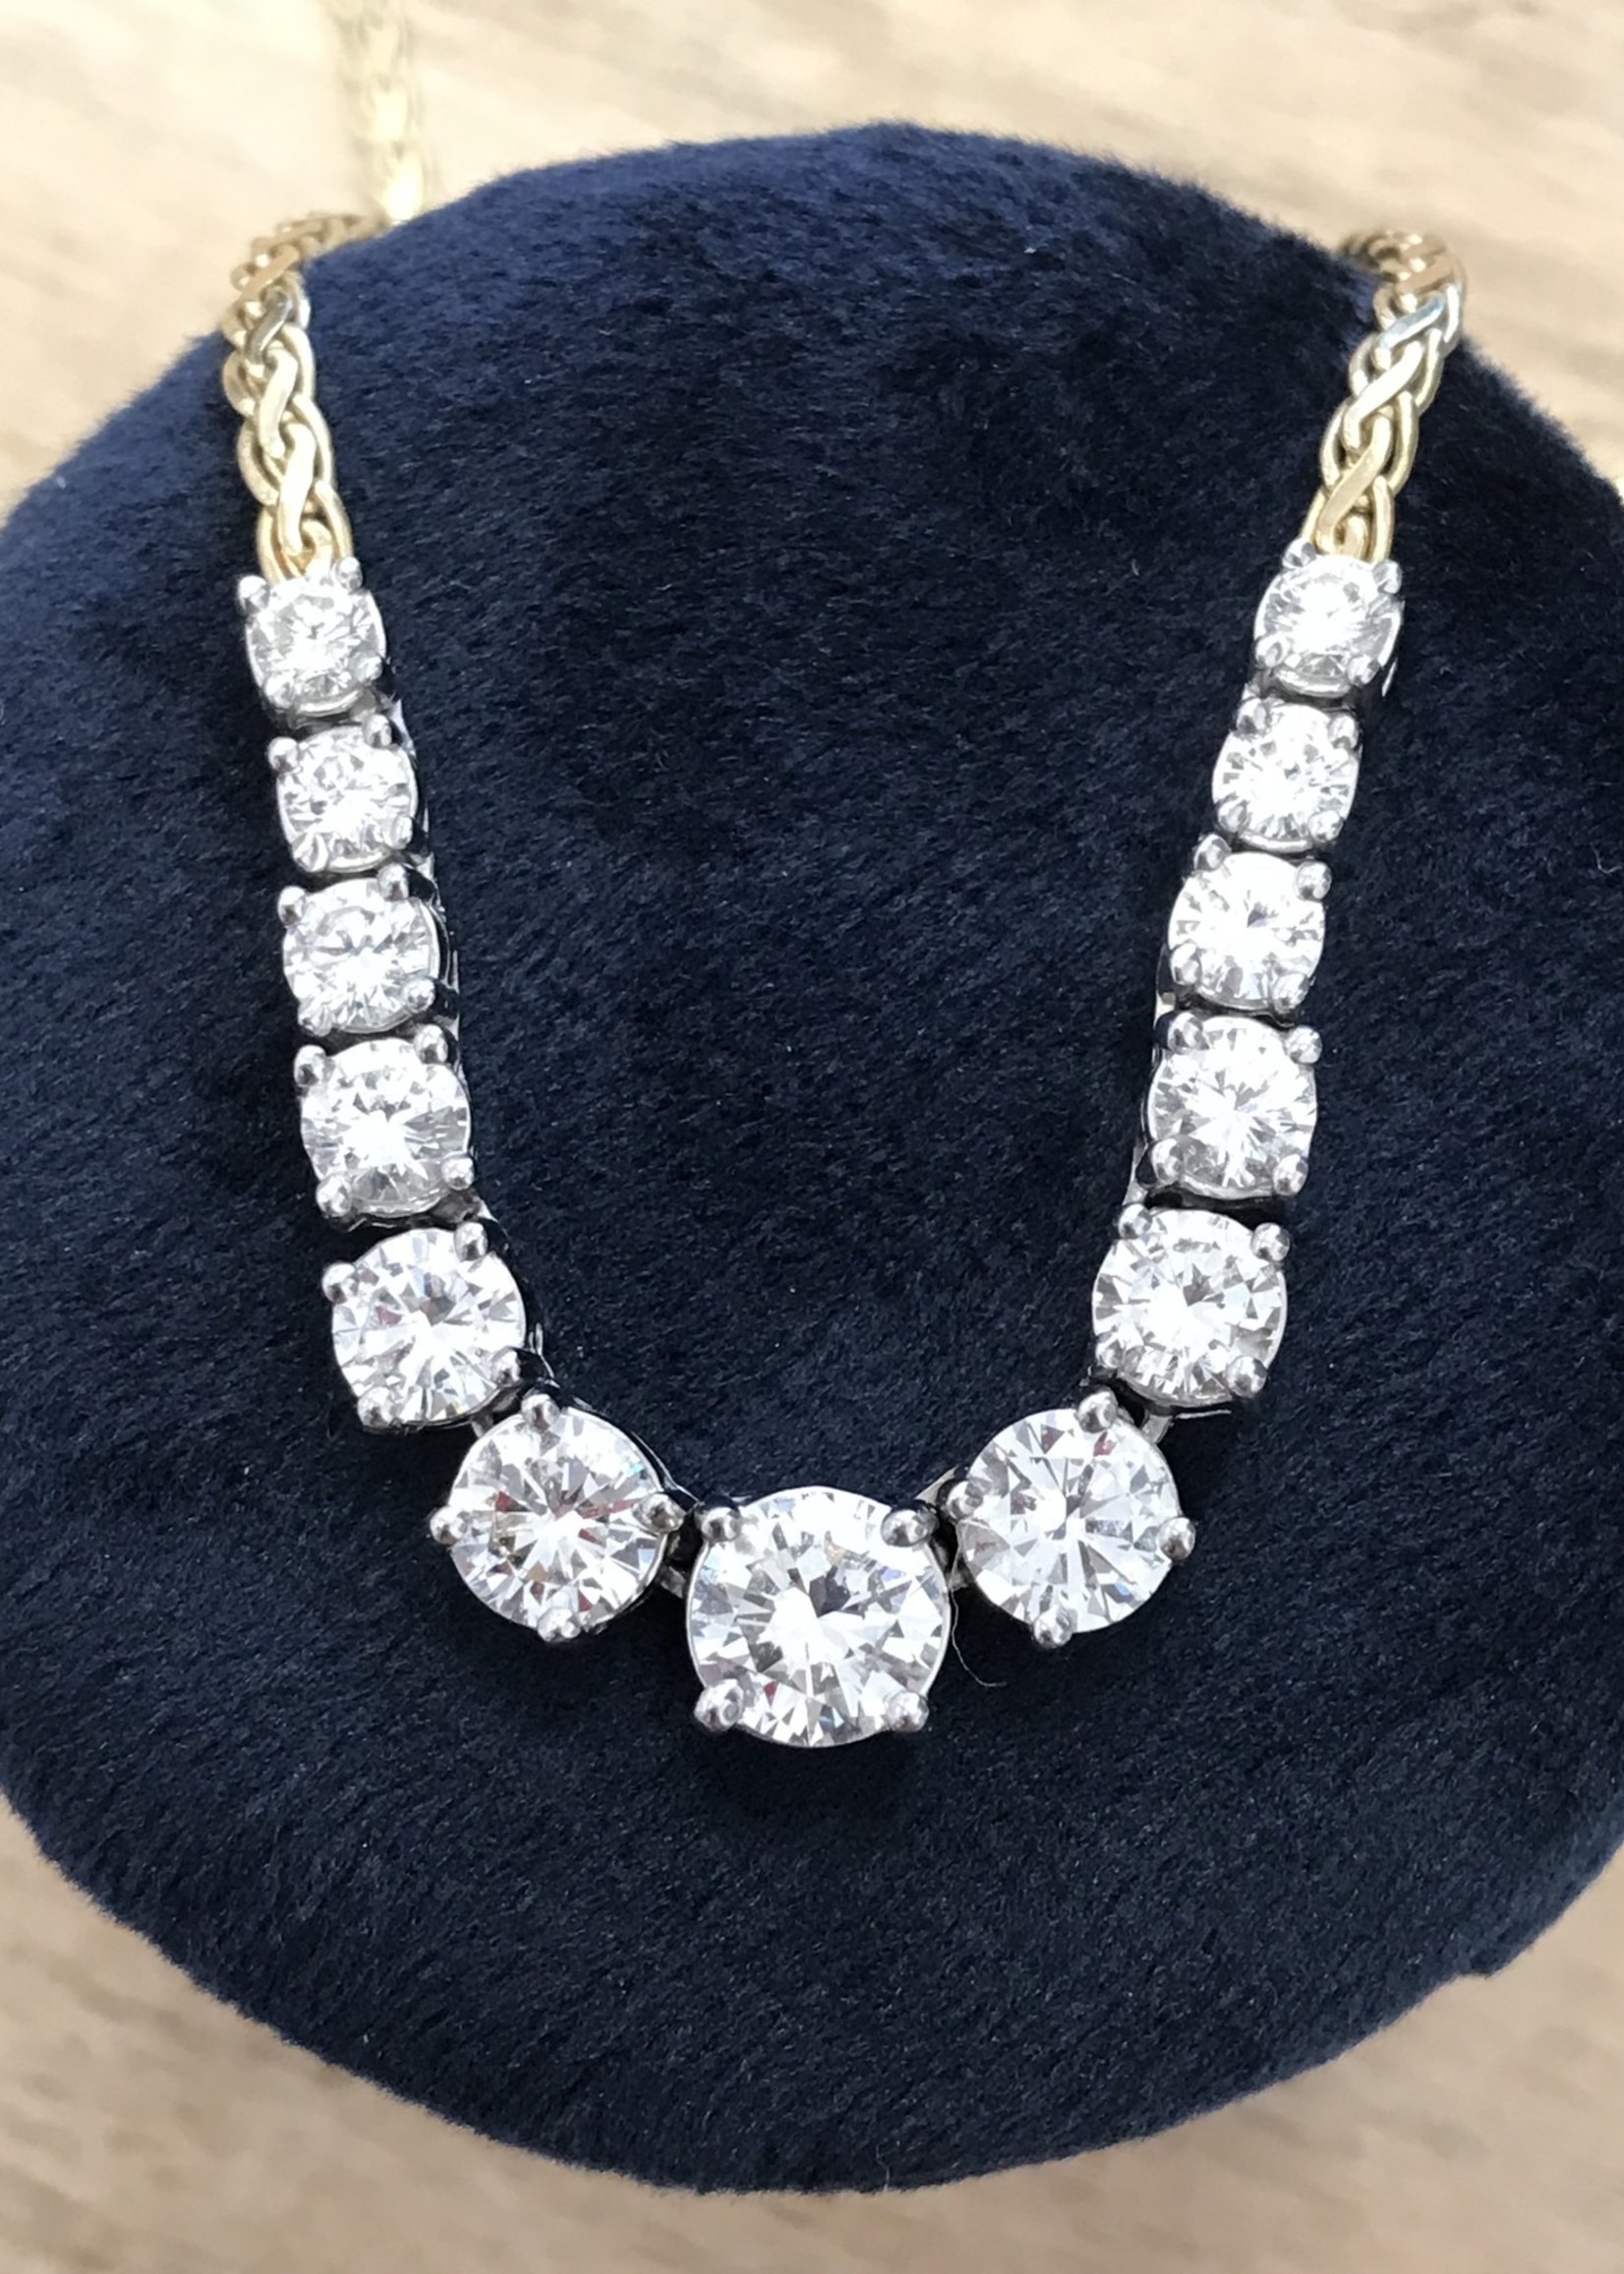 14k/Platinum 5.5 carat Diamond Collar